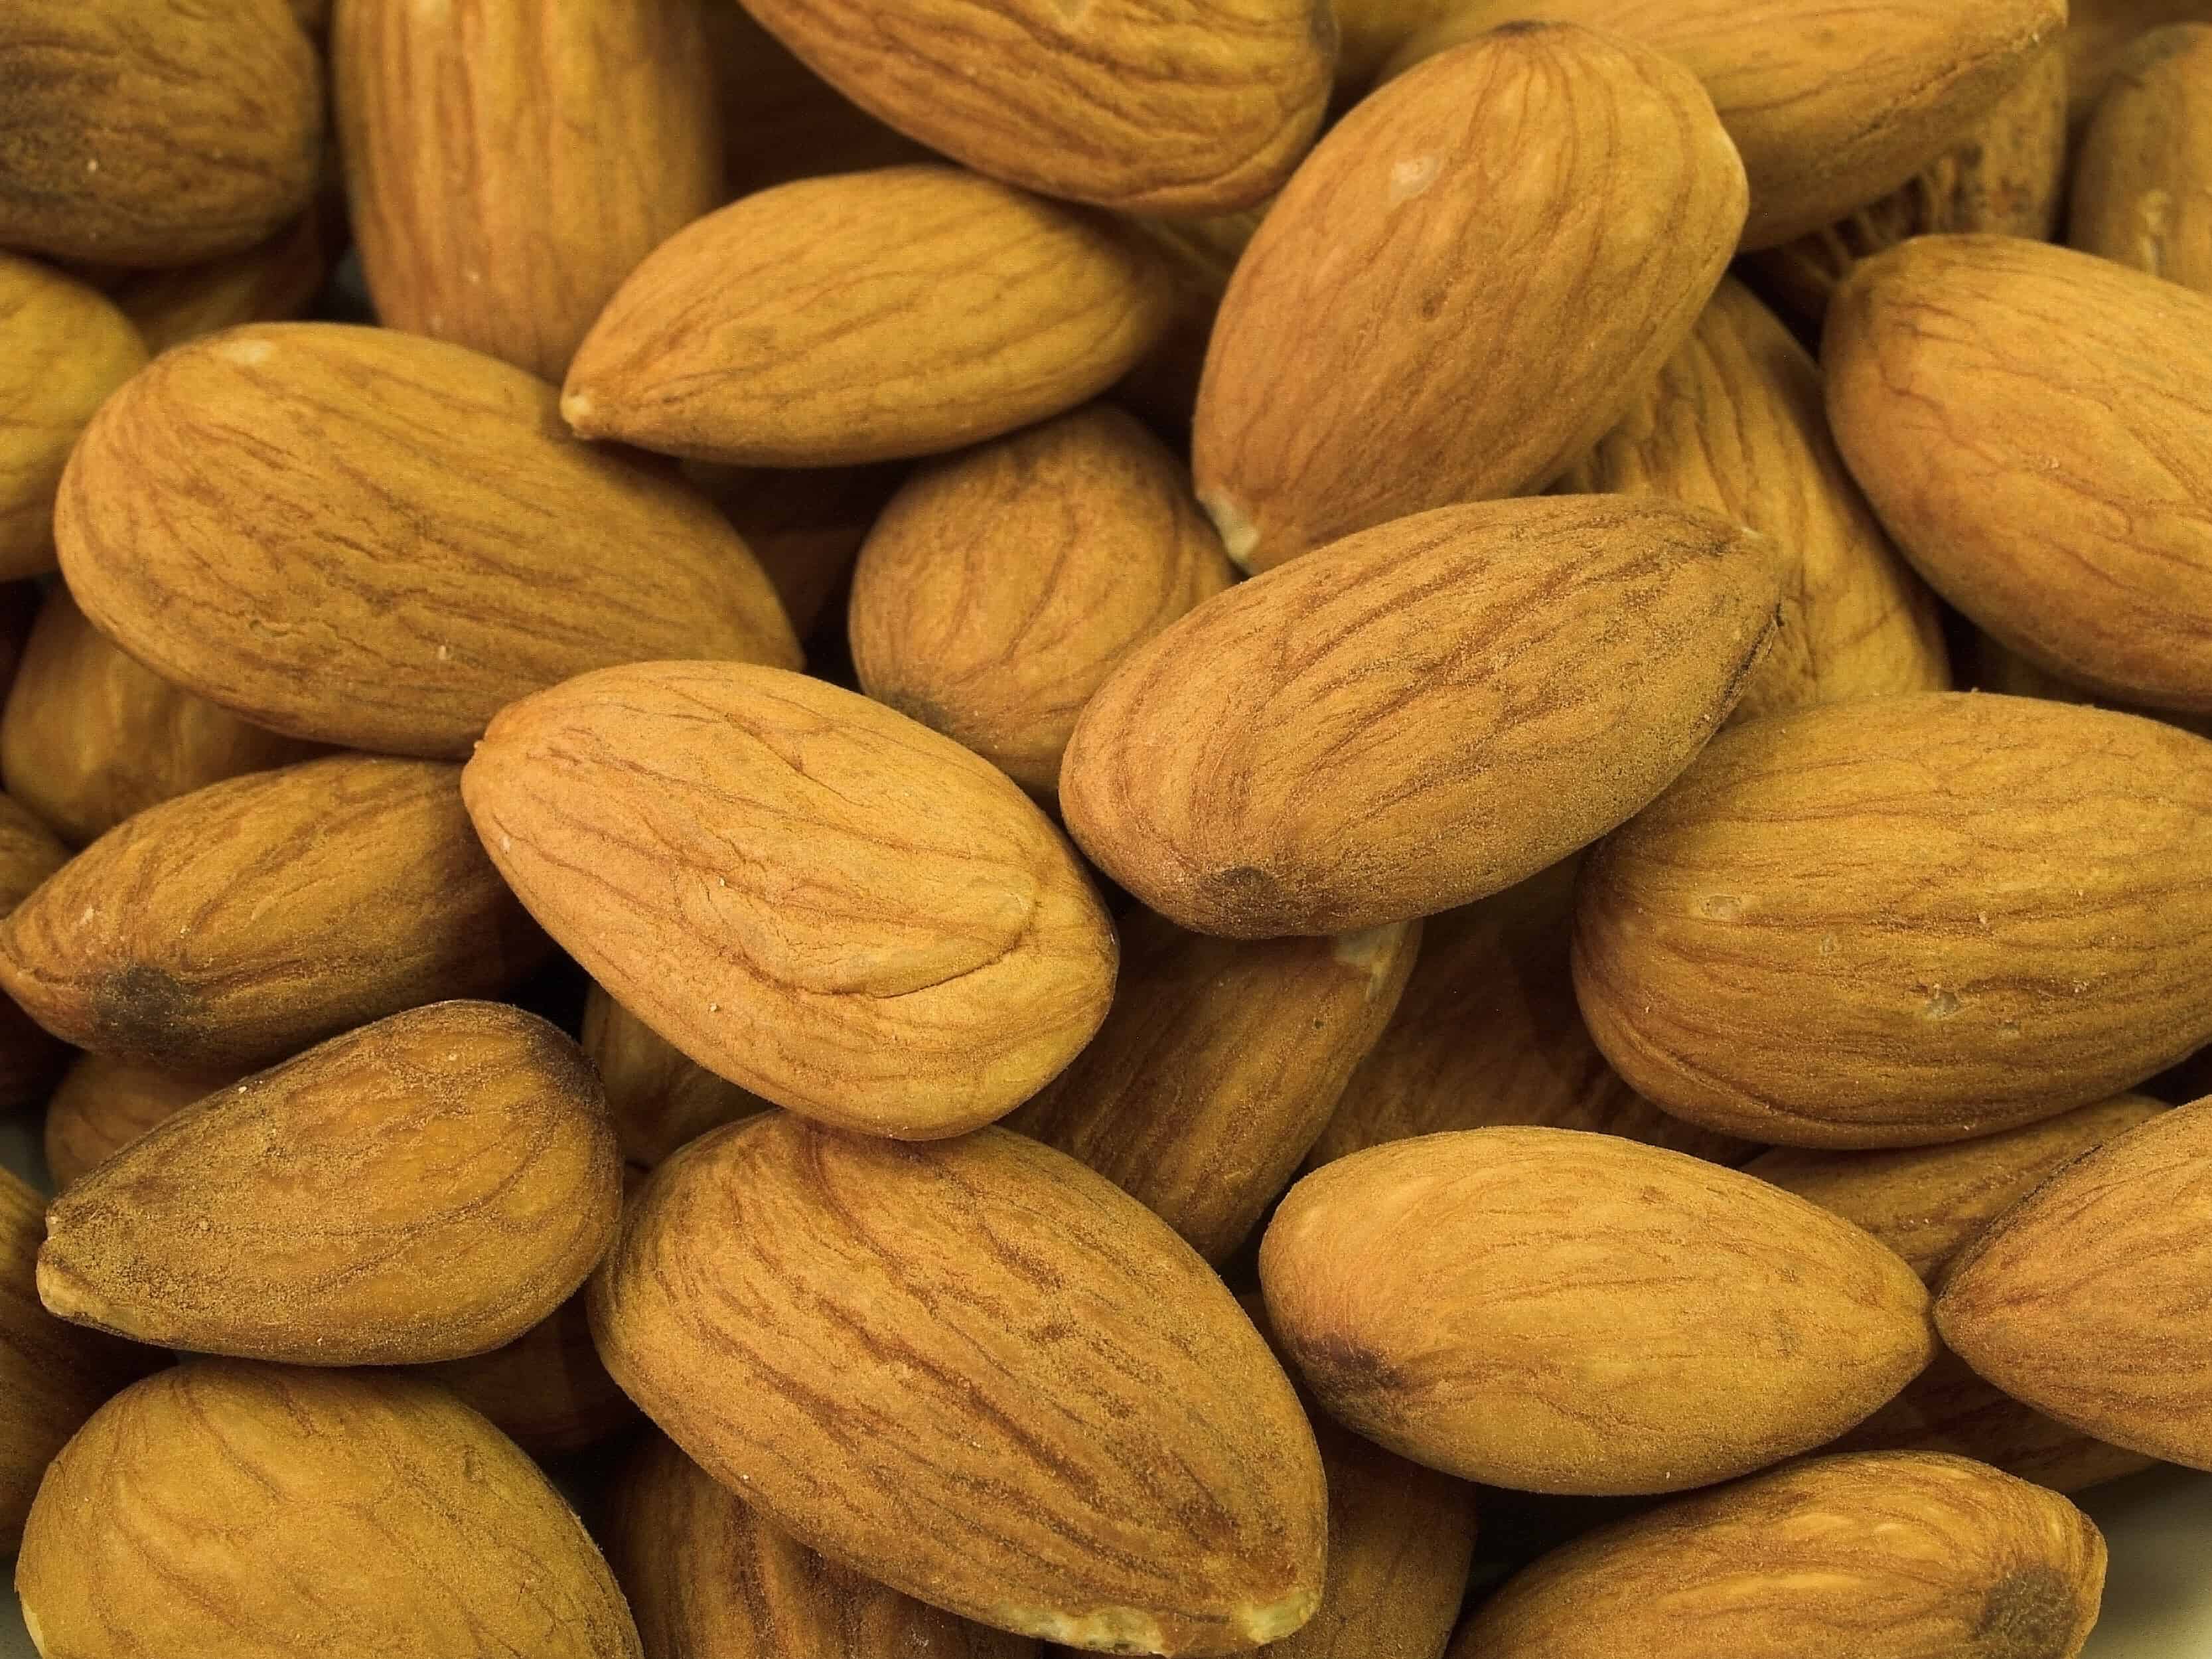 almonds prevent grey hair